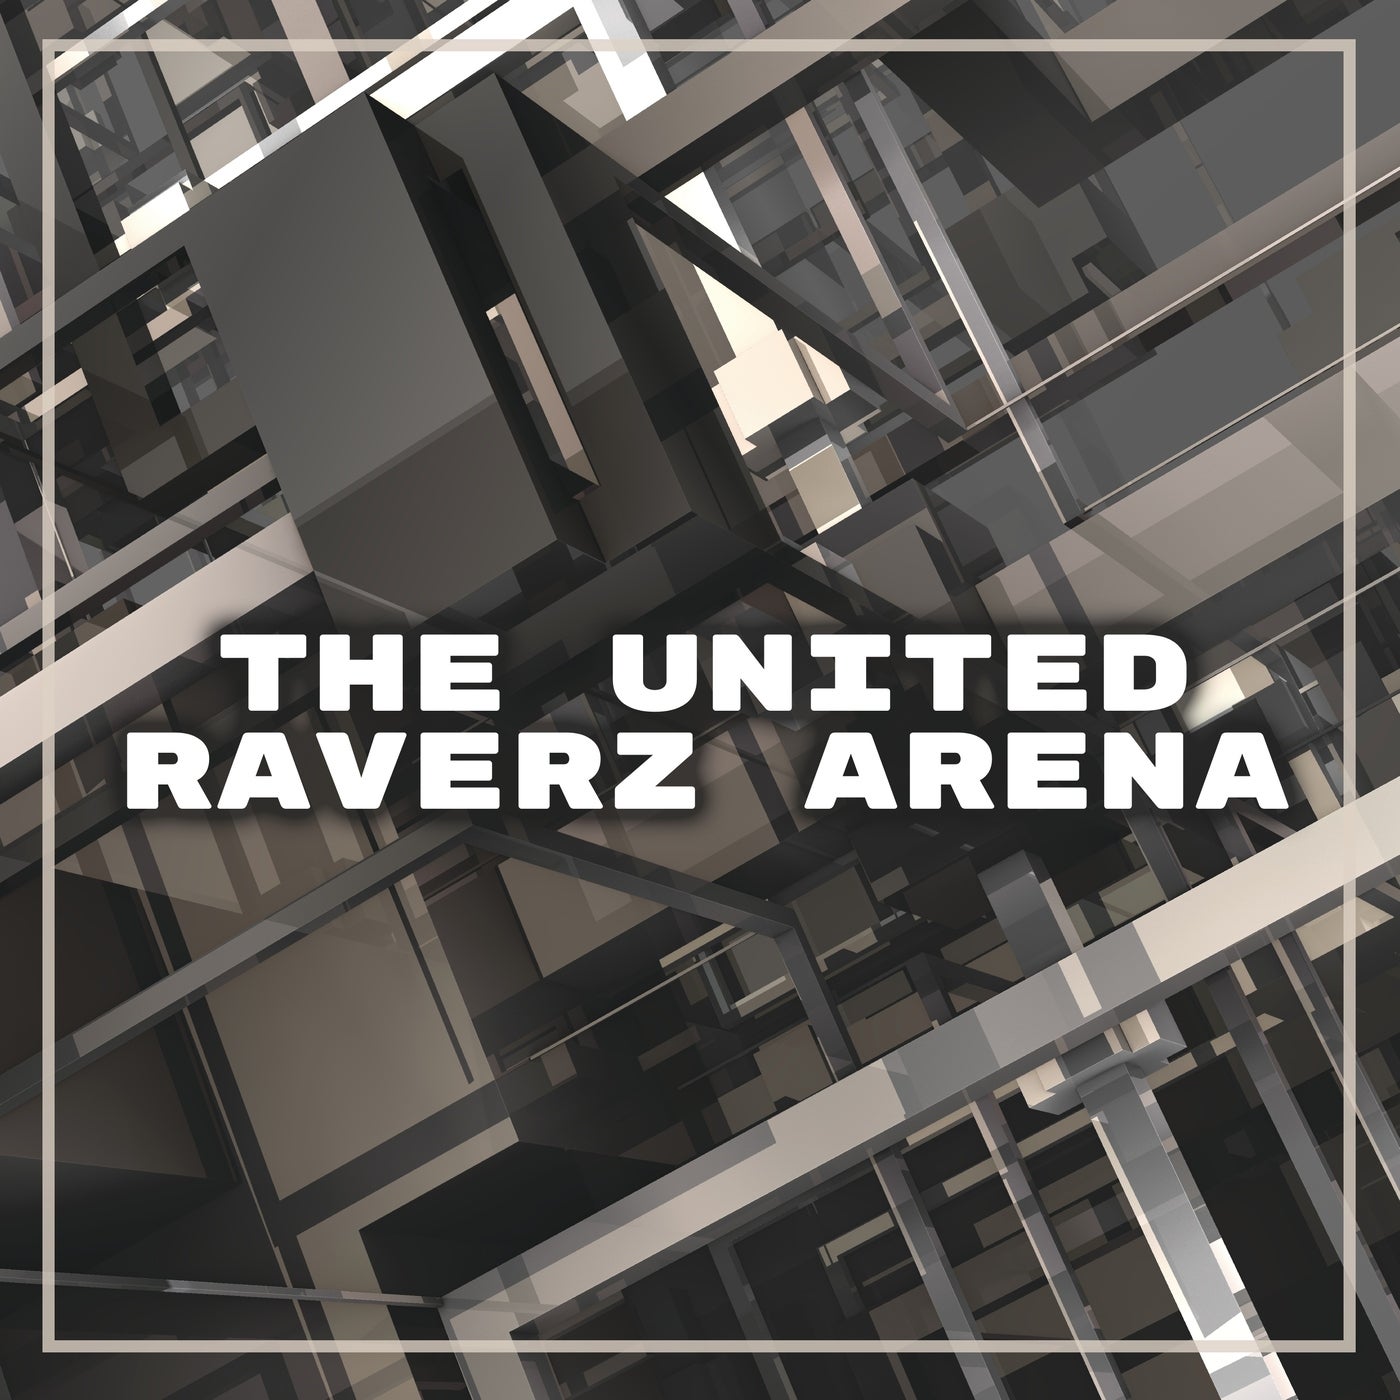 The United Raverz Arena